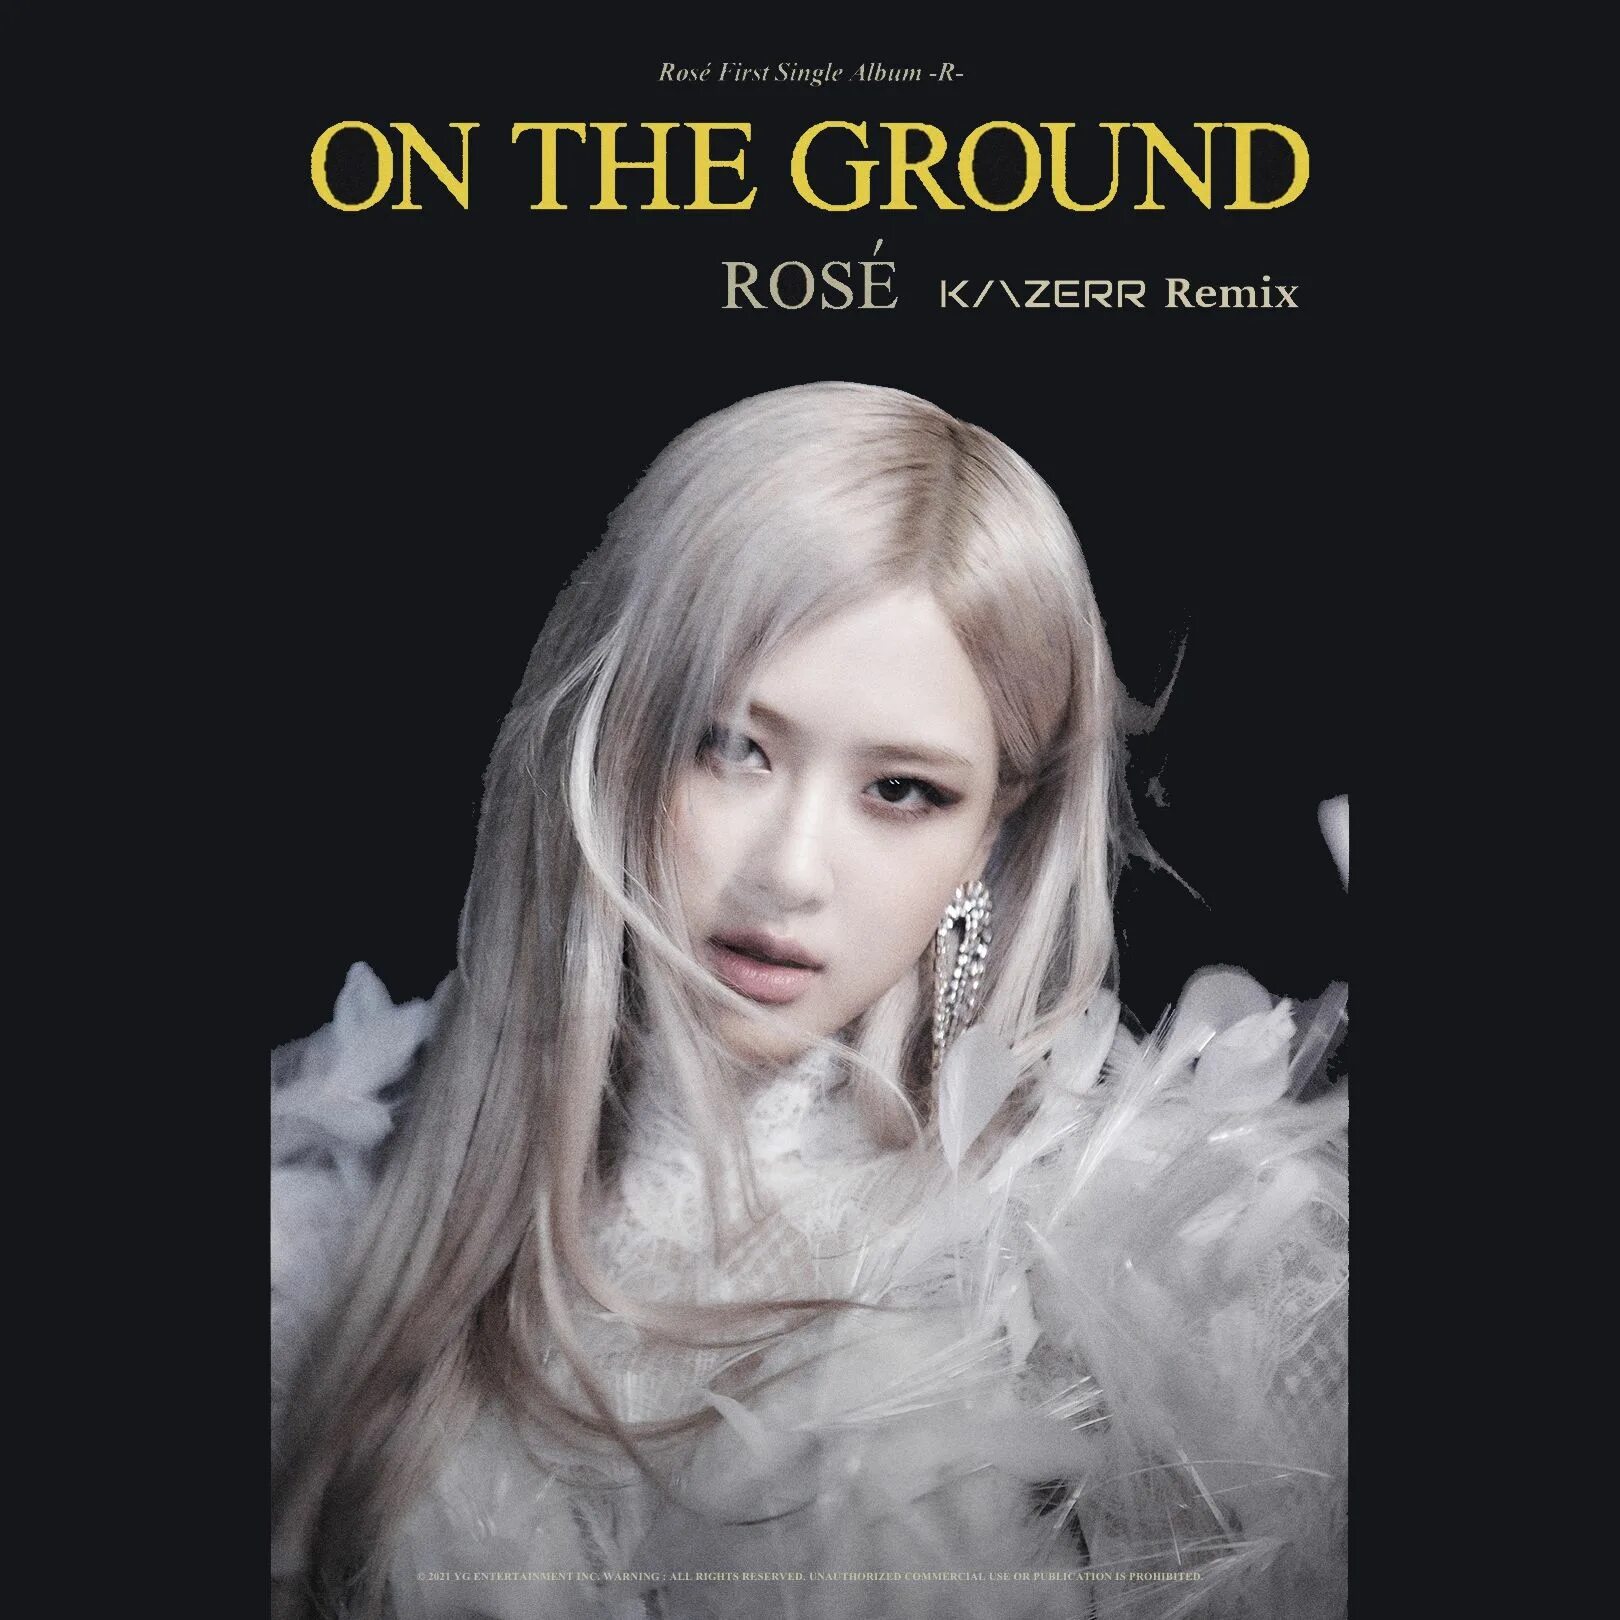 Розе on the ground. Rose on the ground обложка. Розэ BLACKPINK on the ground. Розэ Соло on the ground.